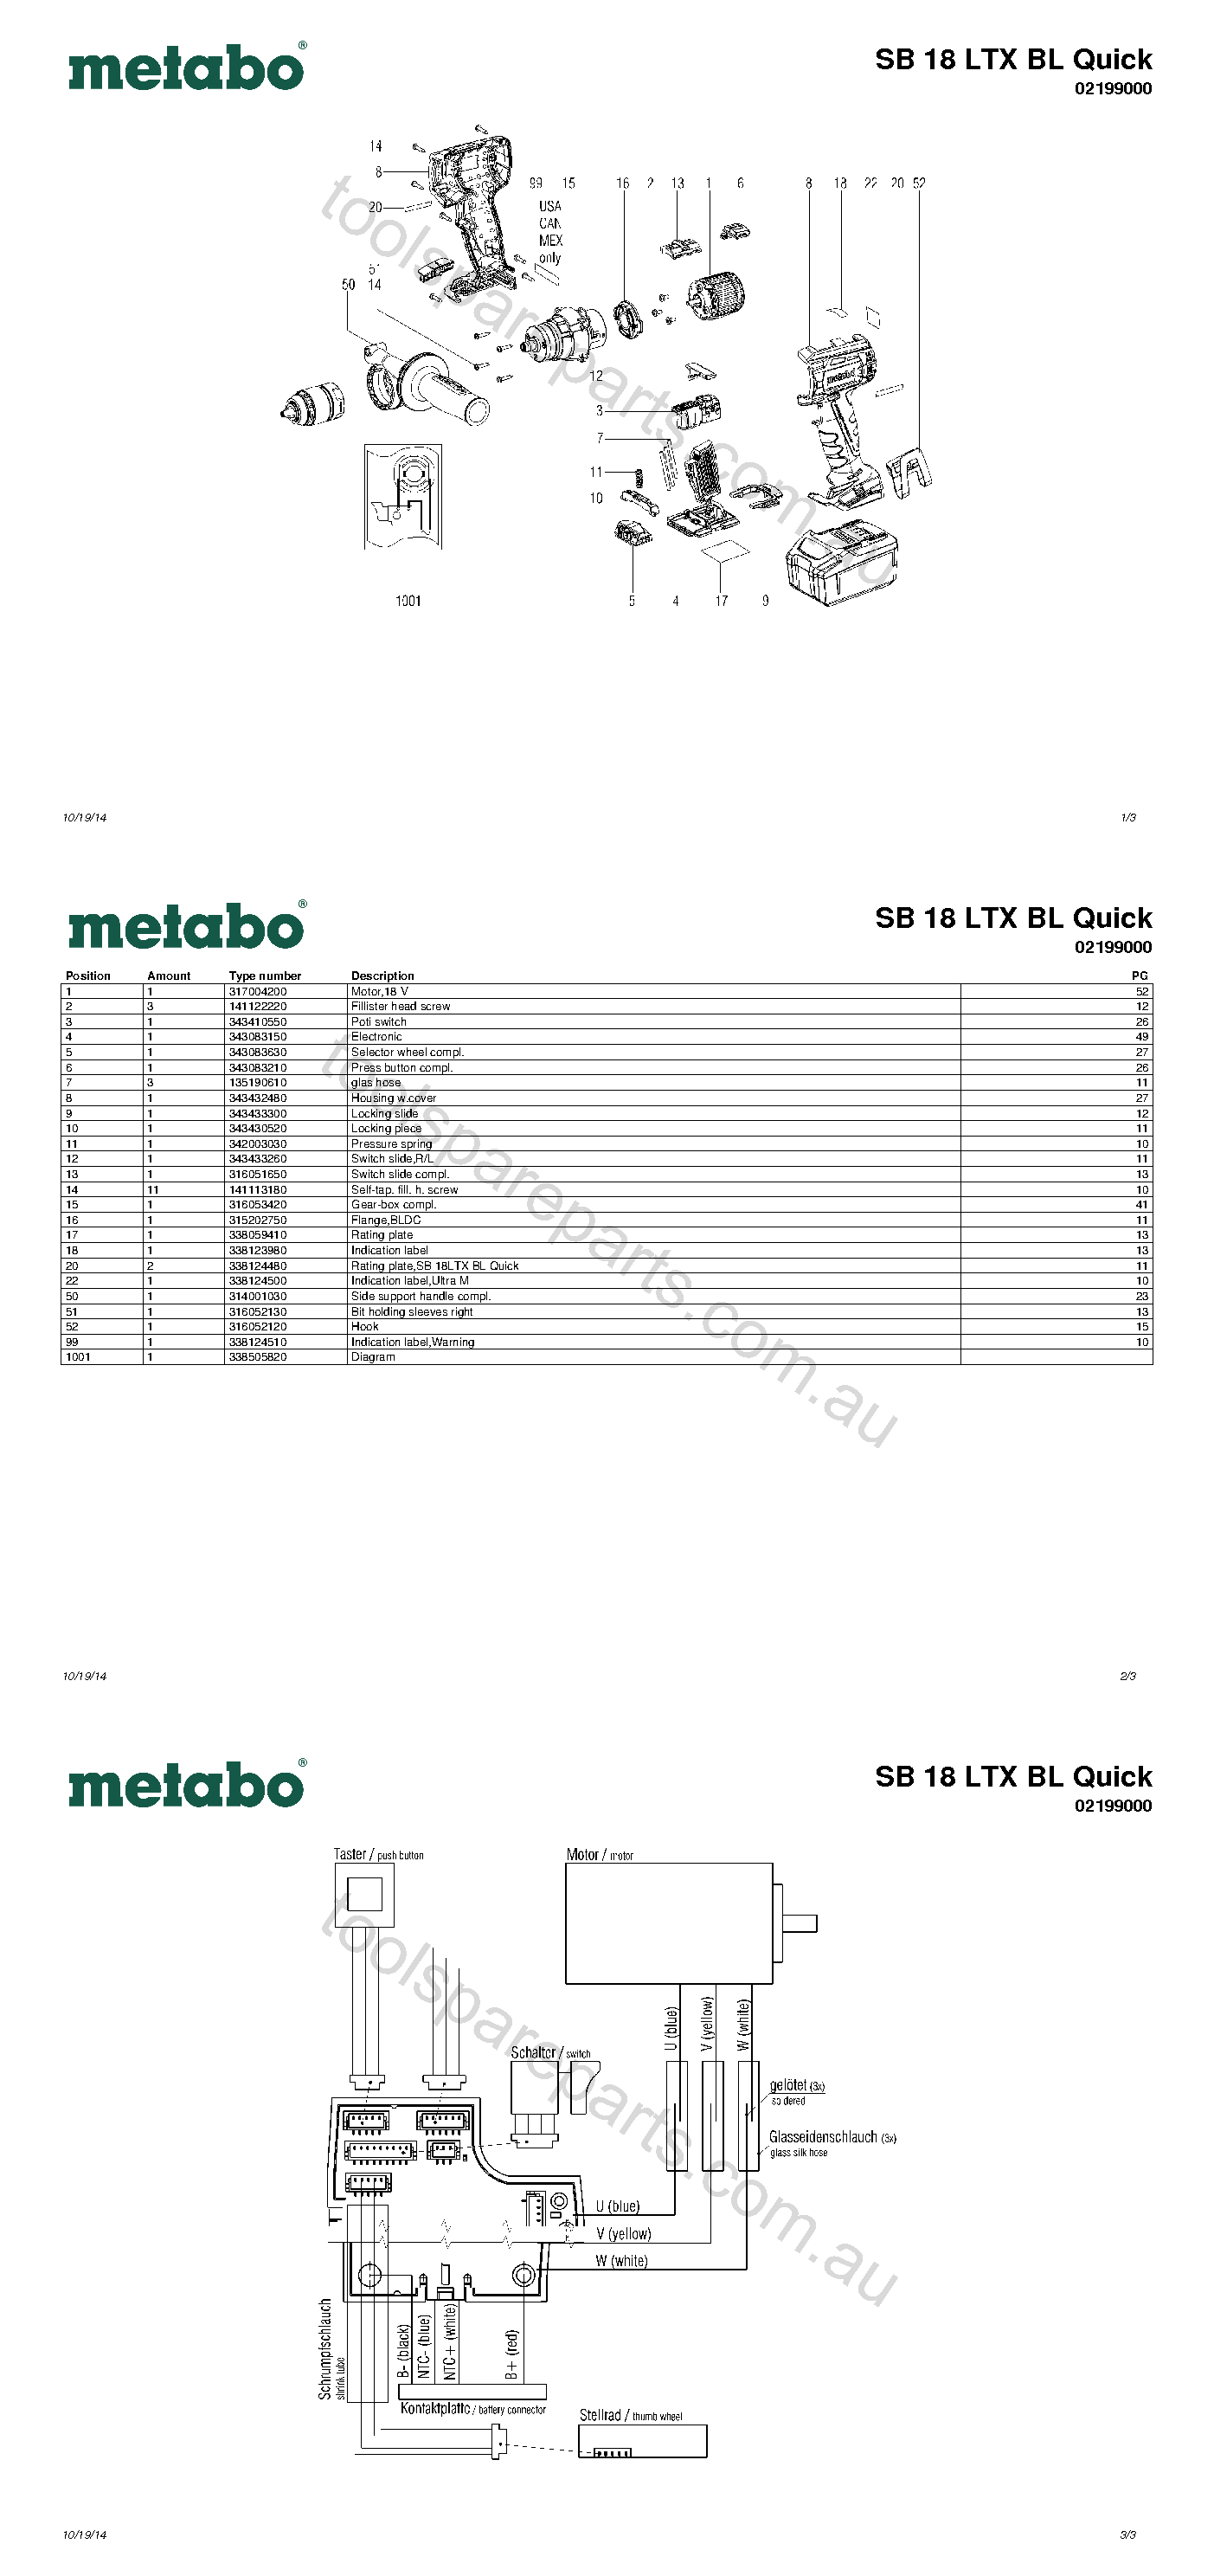 Metabo SB 18 LTX BL Quick 02199000  Diagram 1